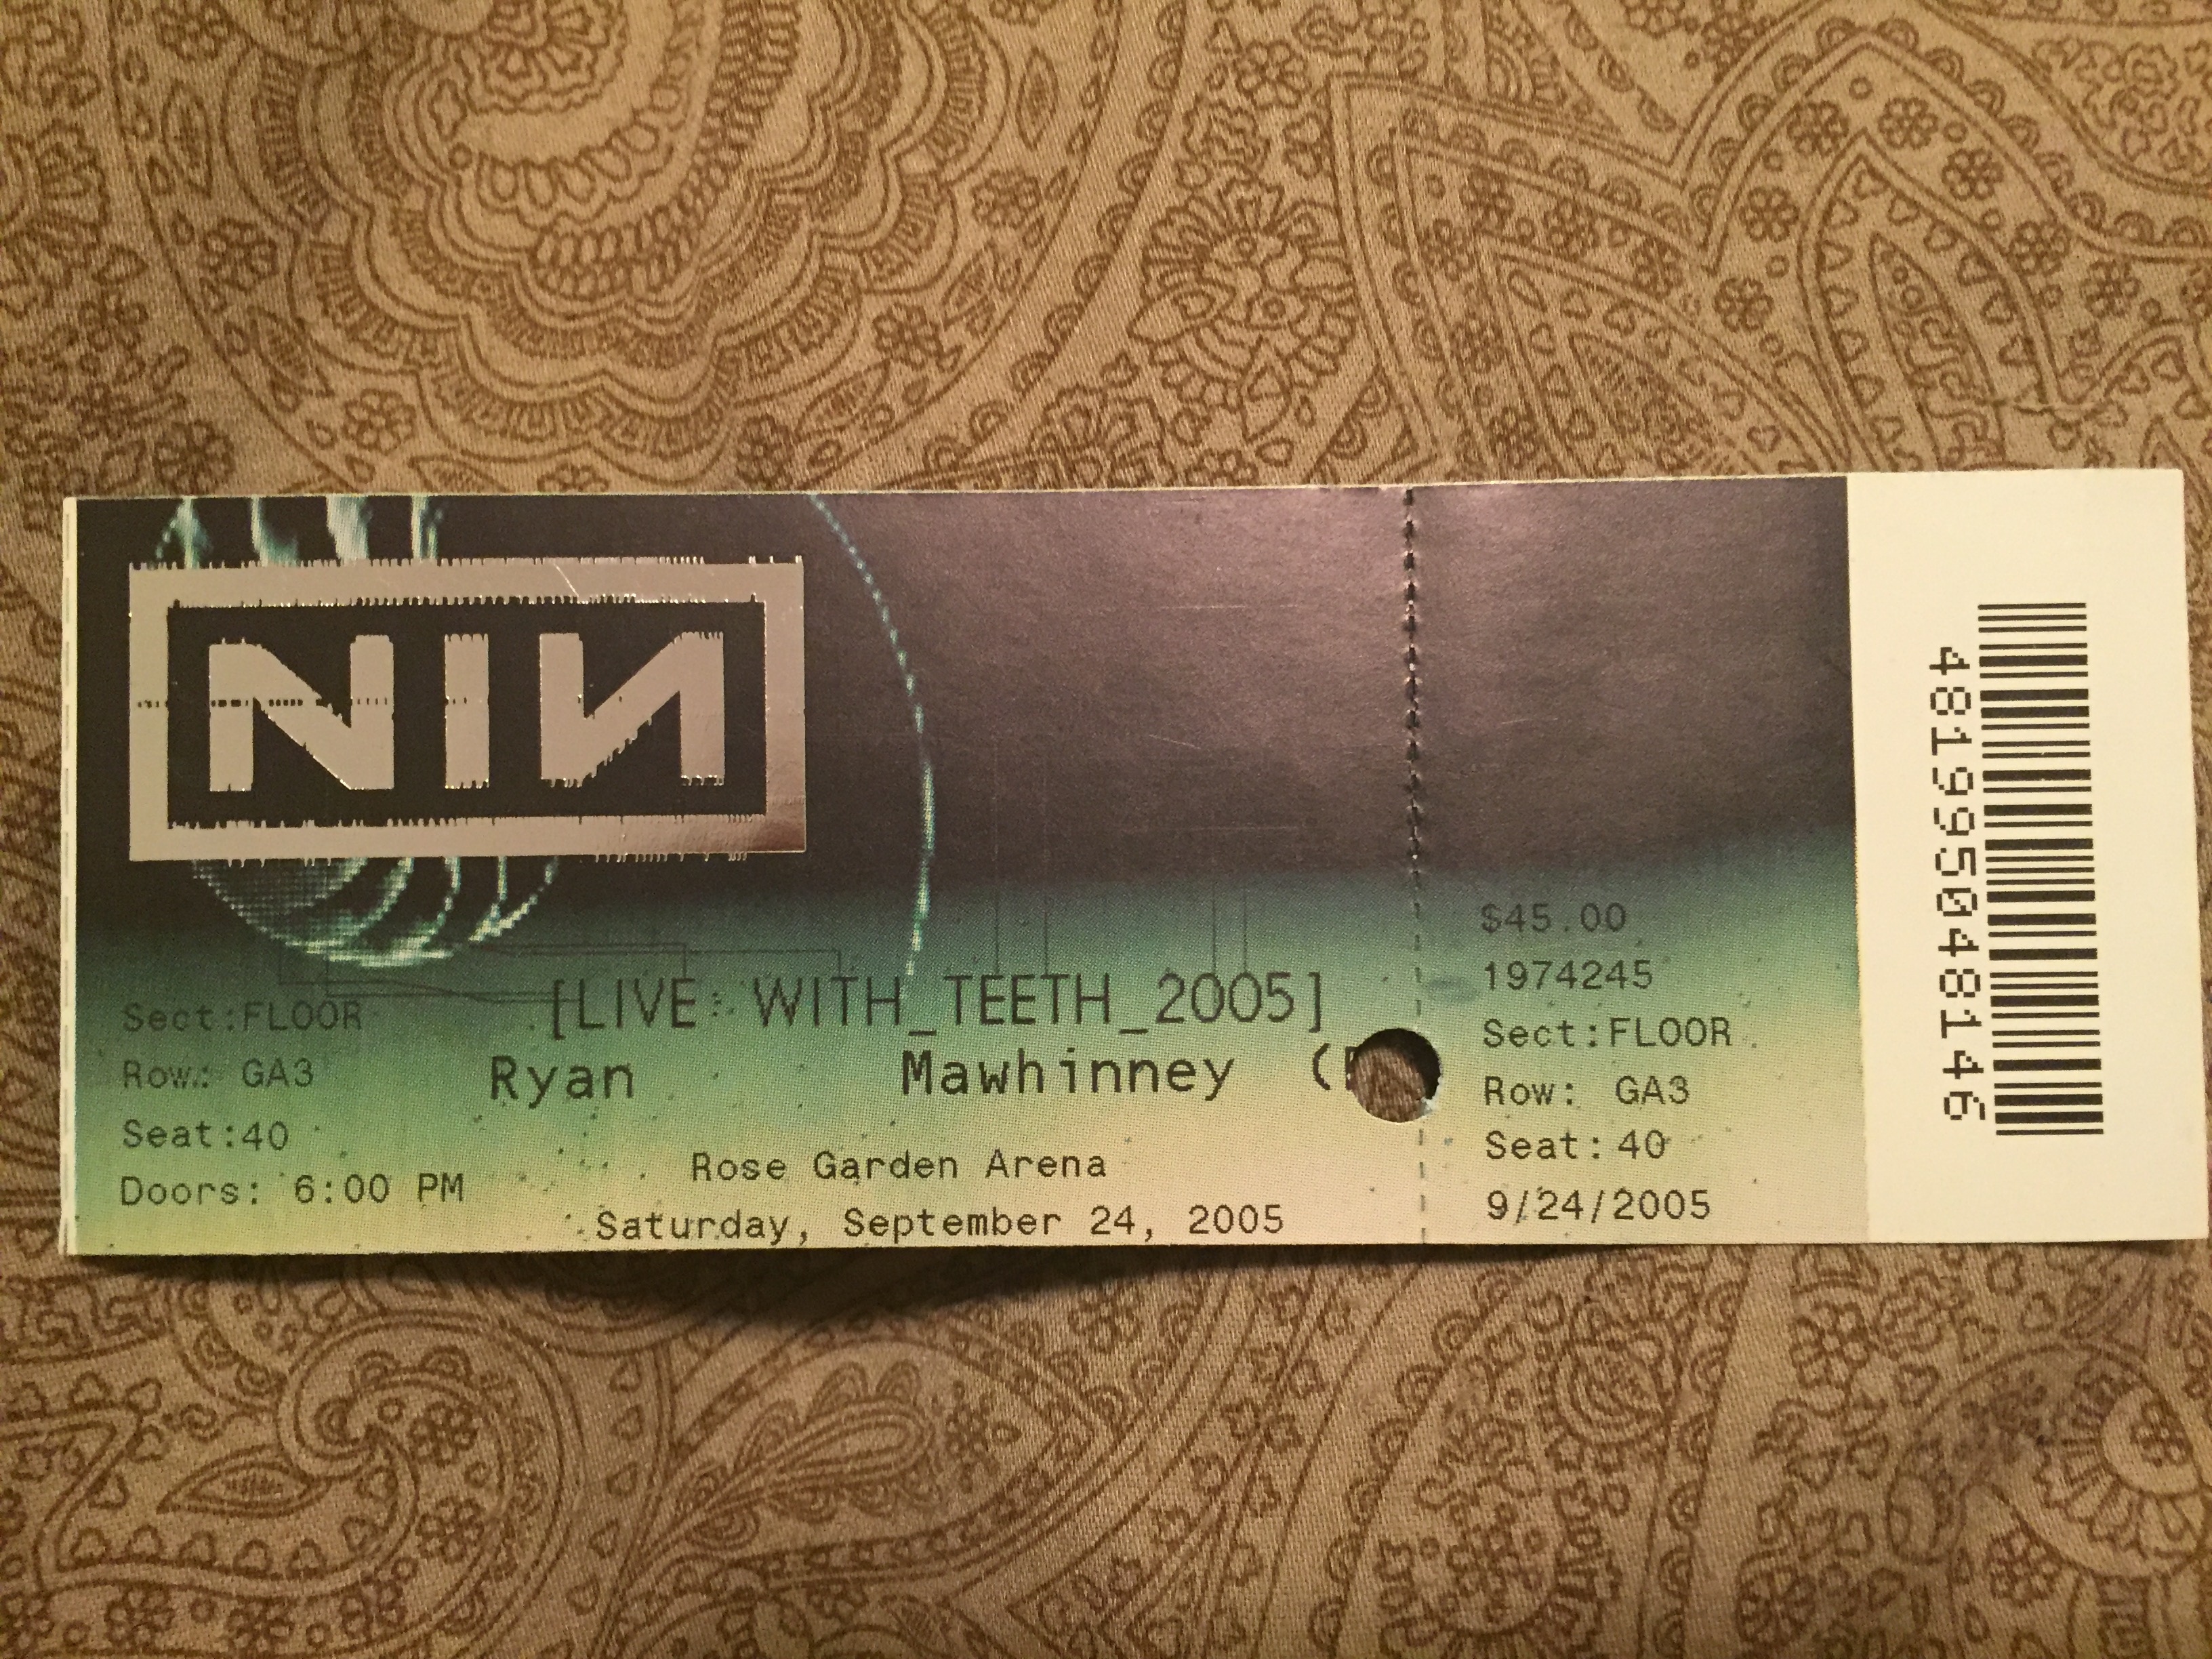 2005/09/24 Ticket